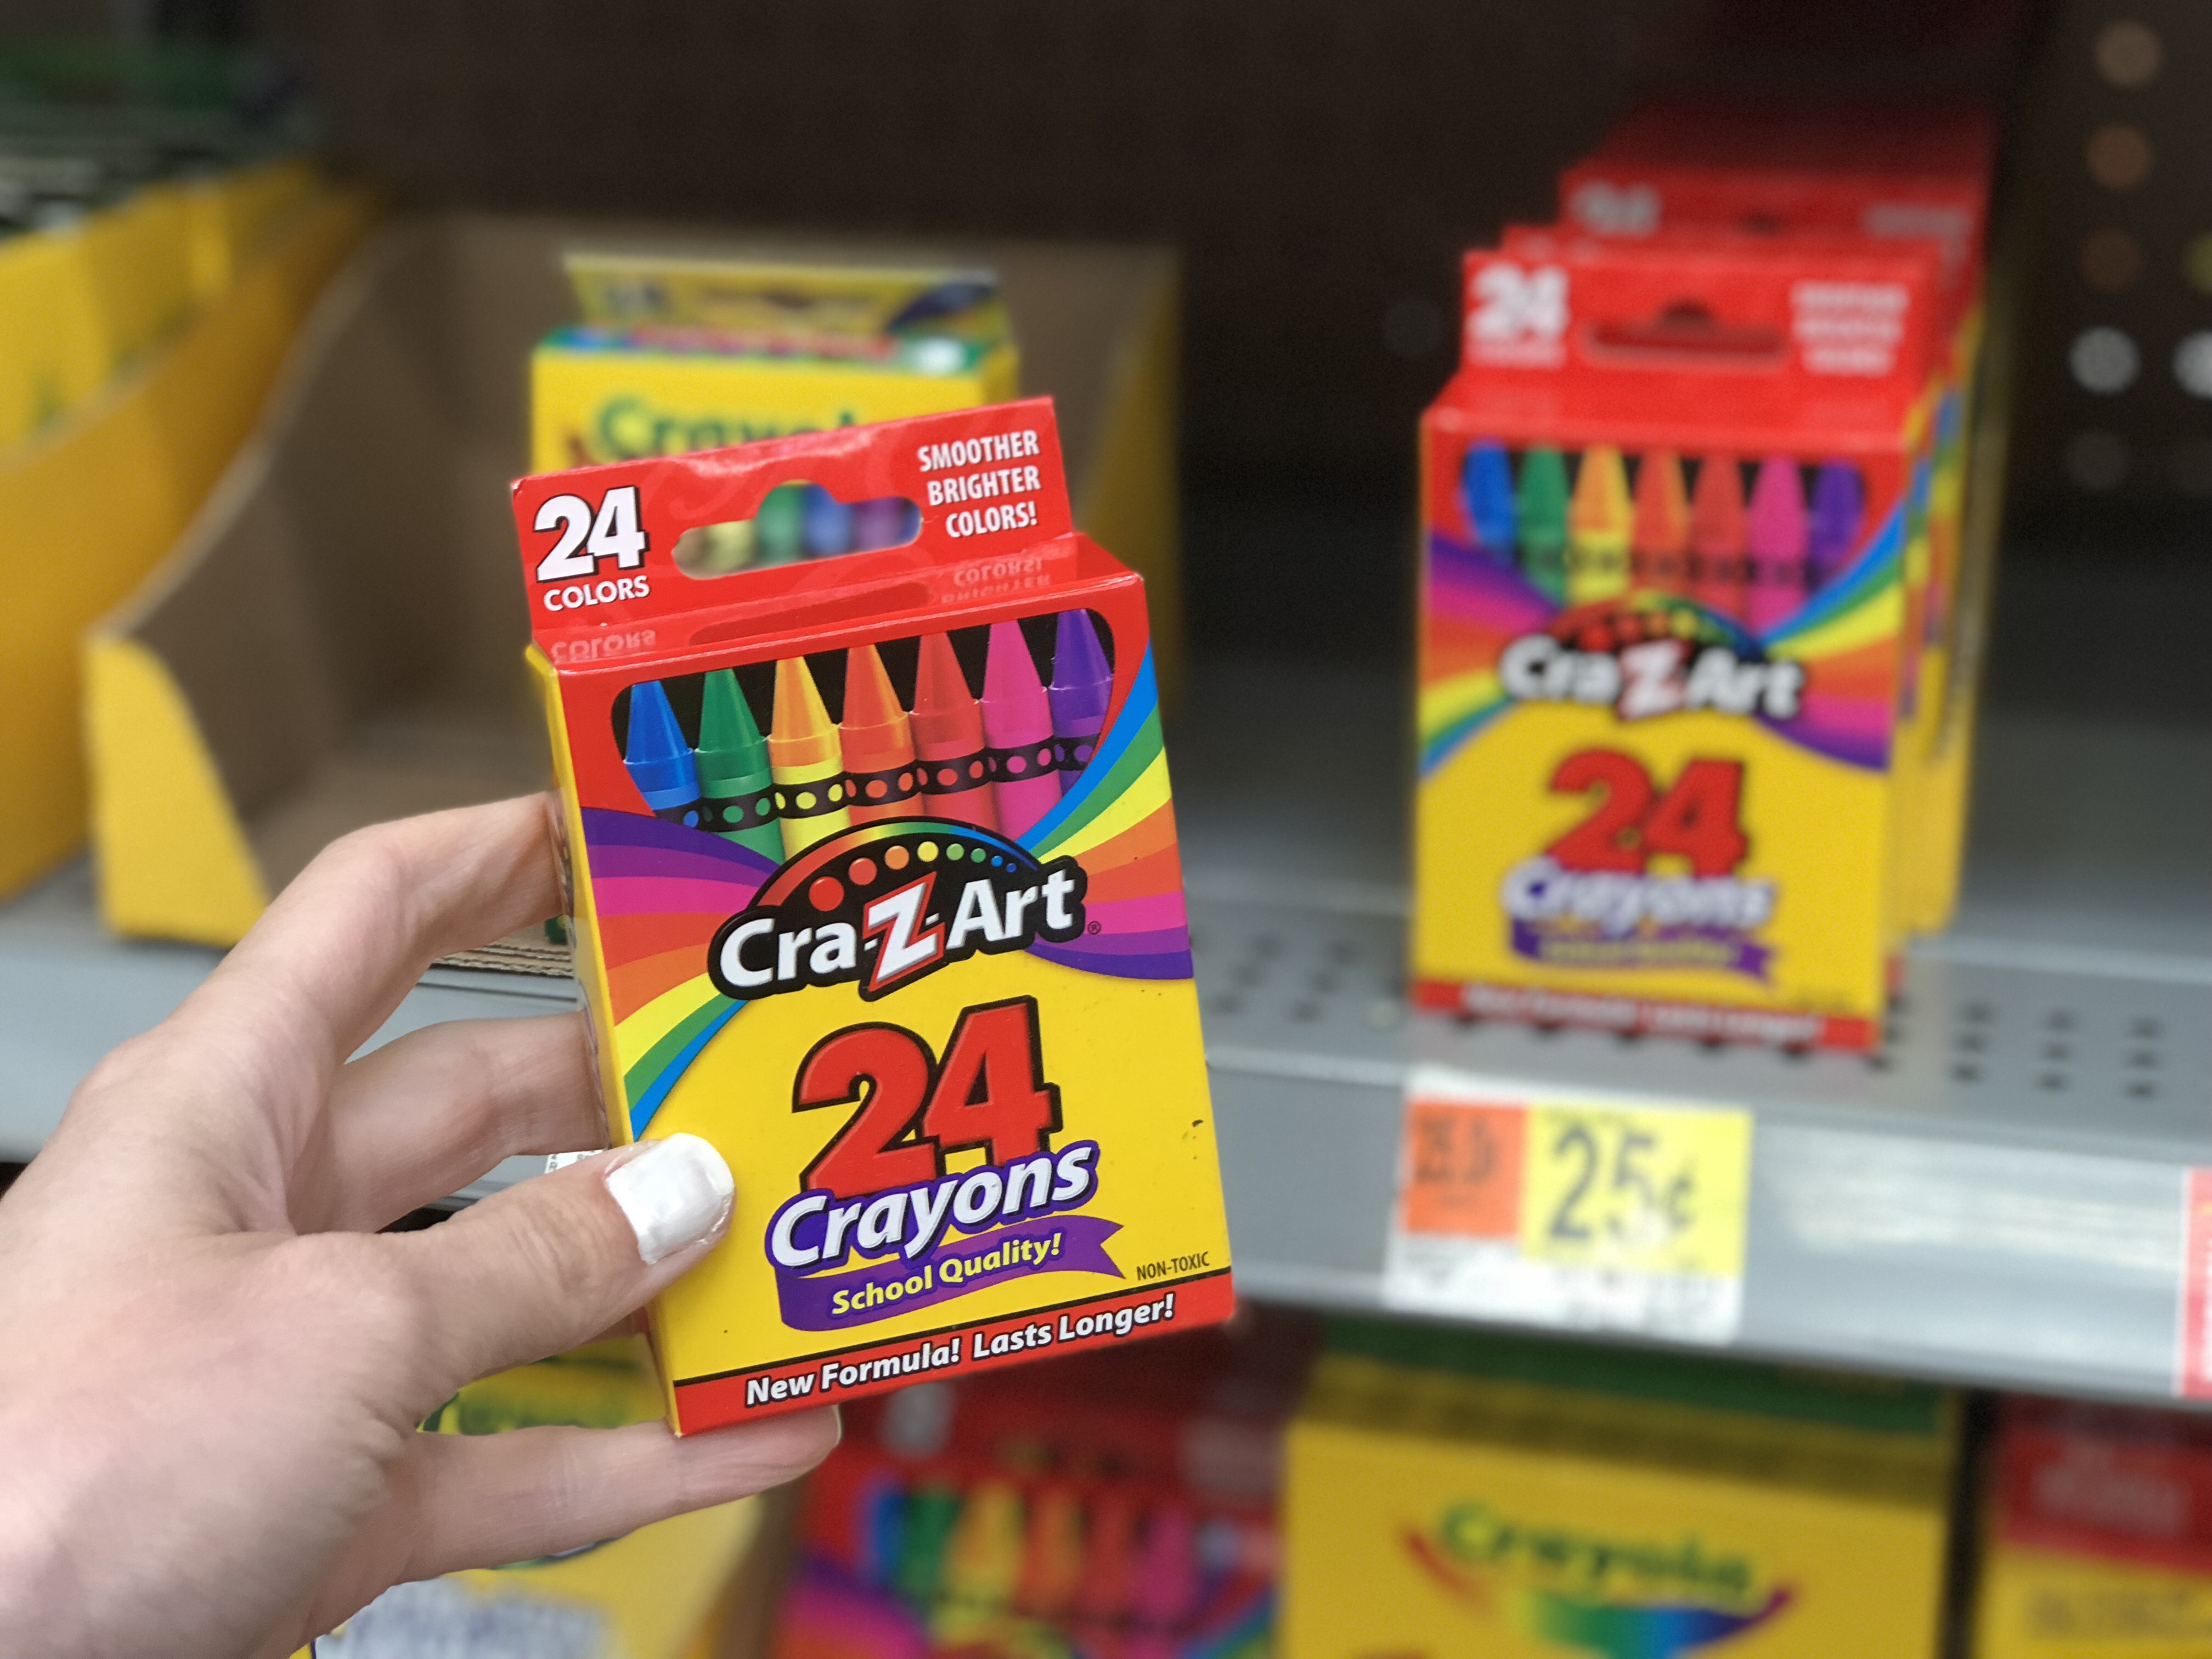 back to school deals at staples, target, and walmart - walmart crayons